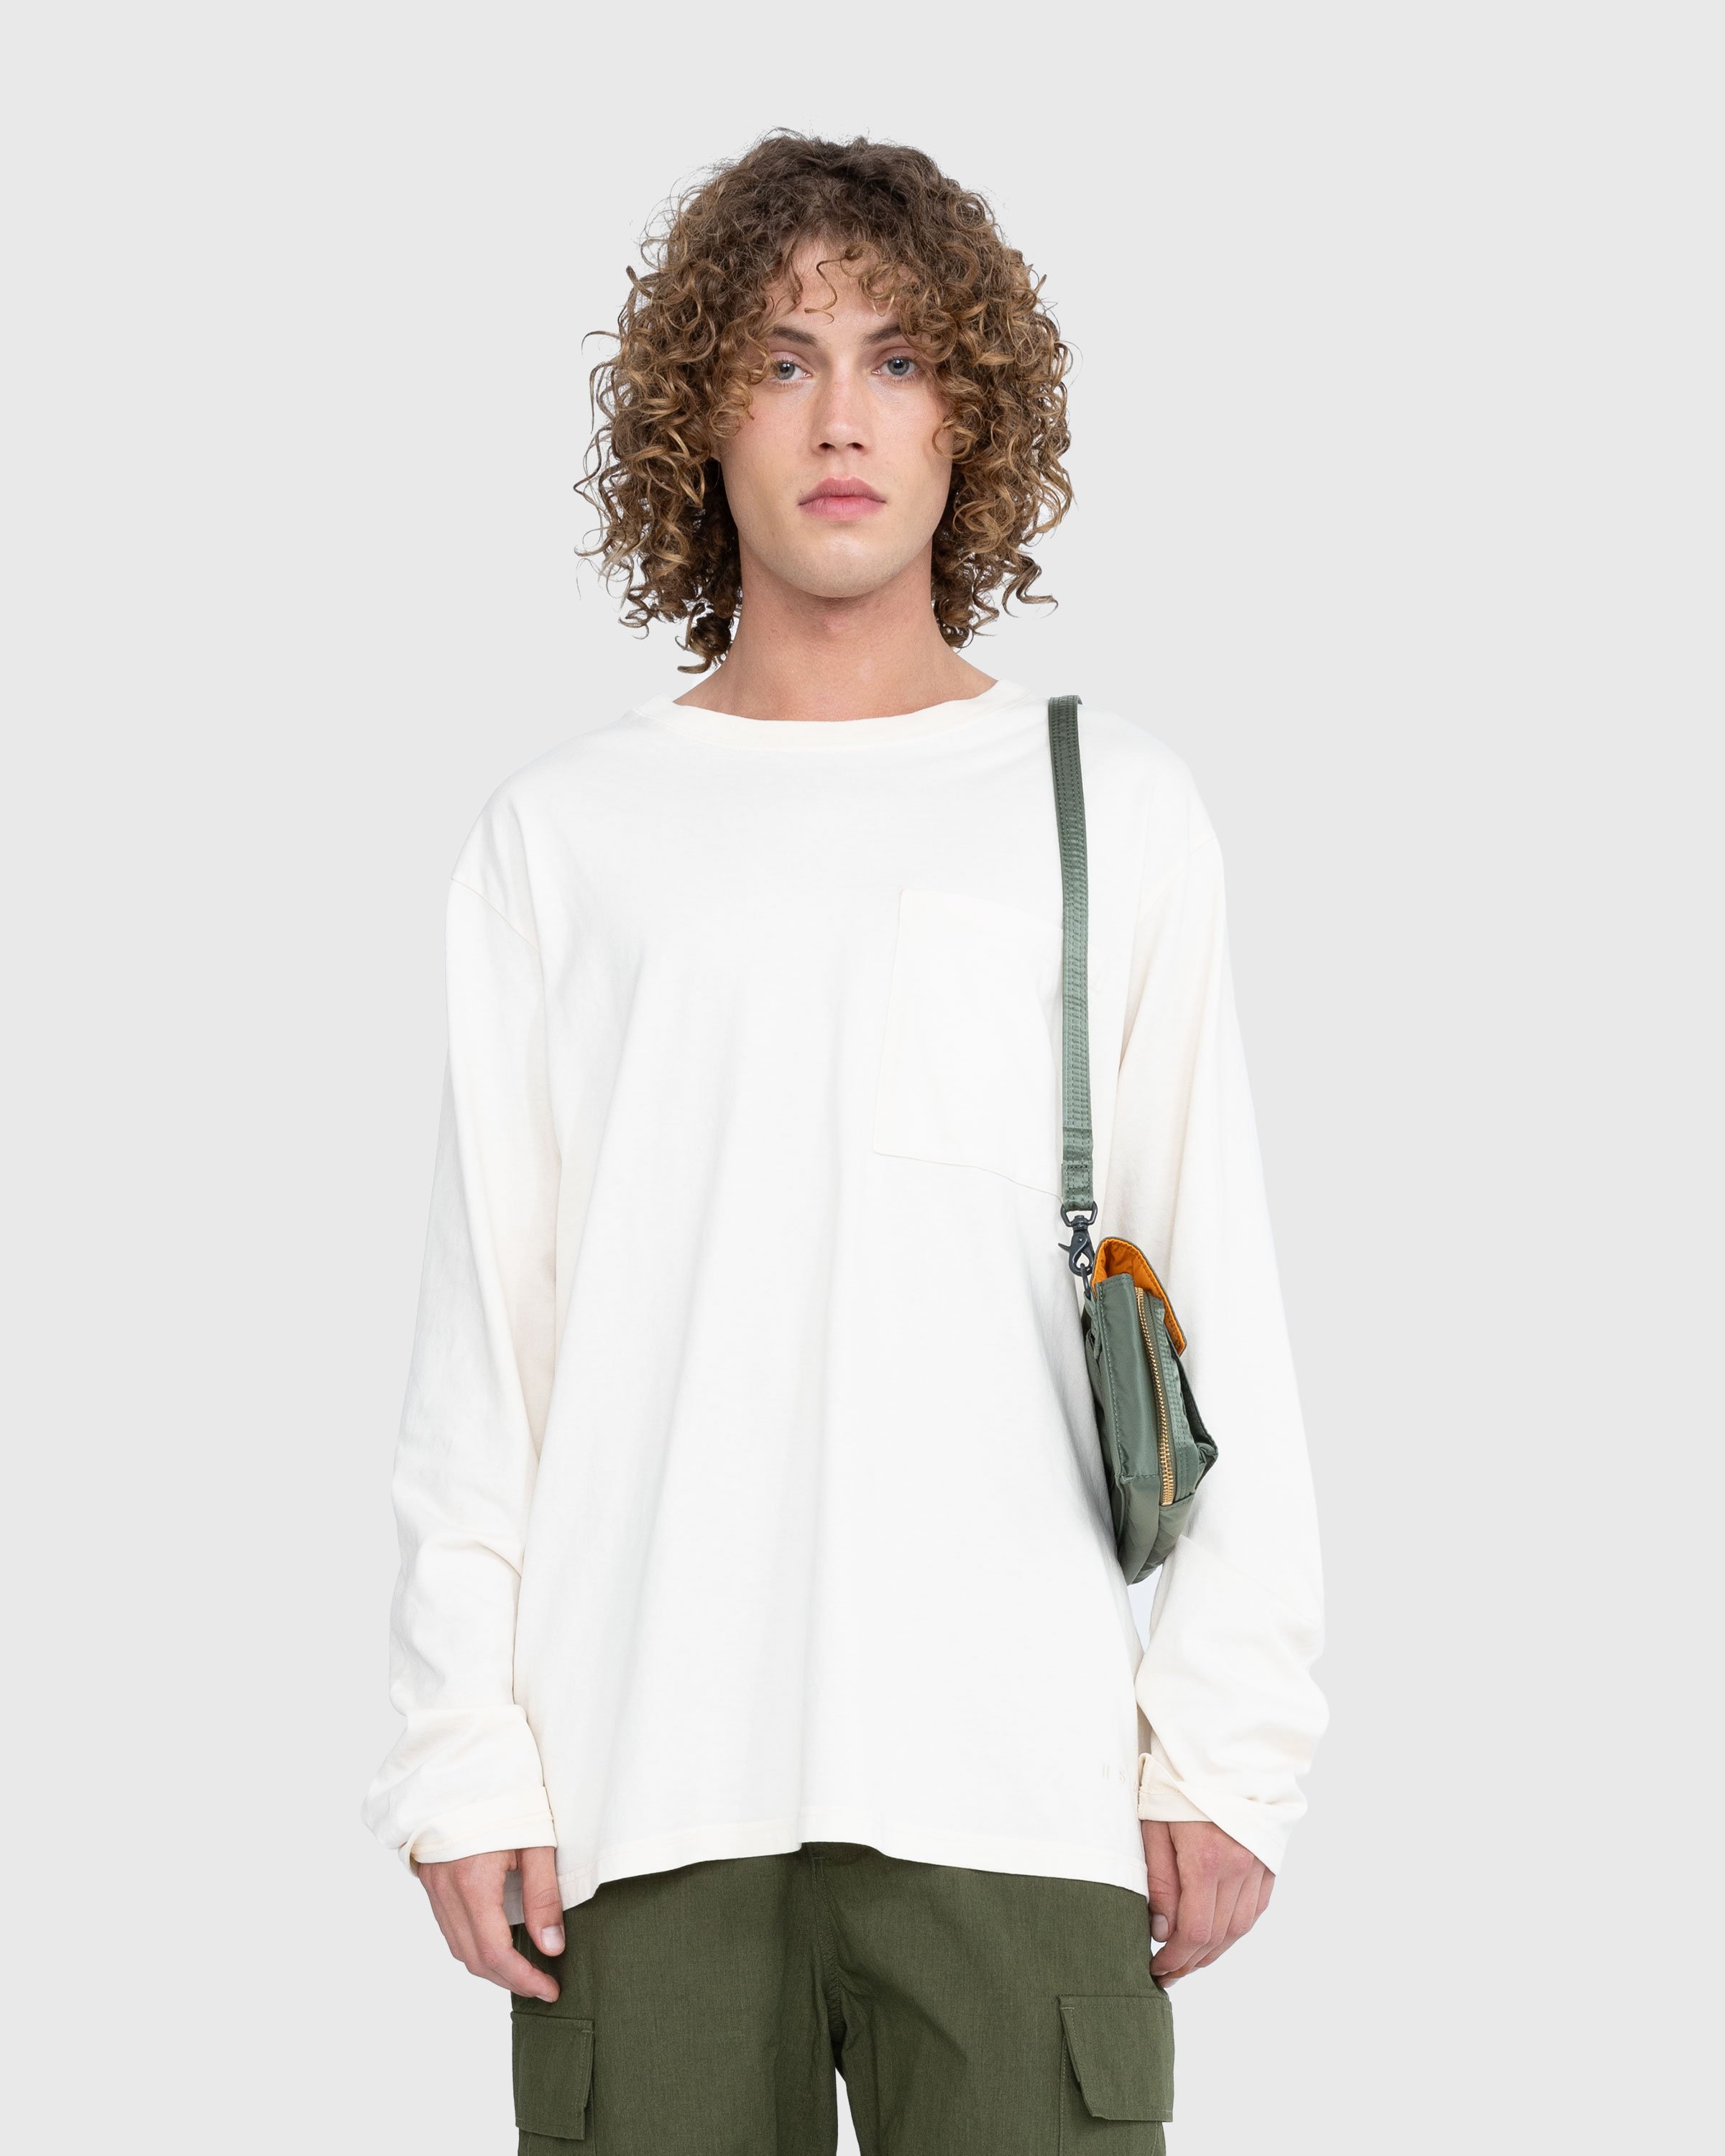 Porter-Yoshida & Co. - TANKER SHOULDER BAG - Accessories - Green - Image 3